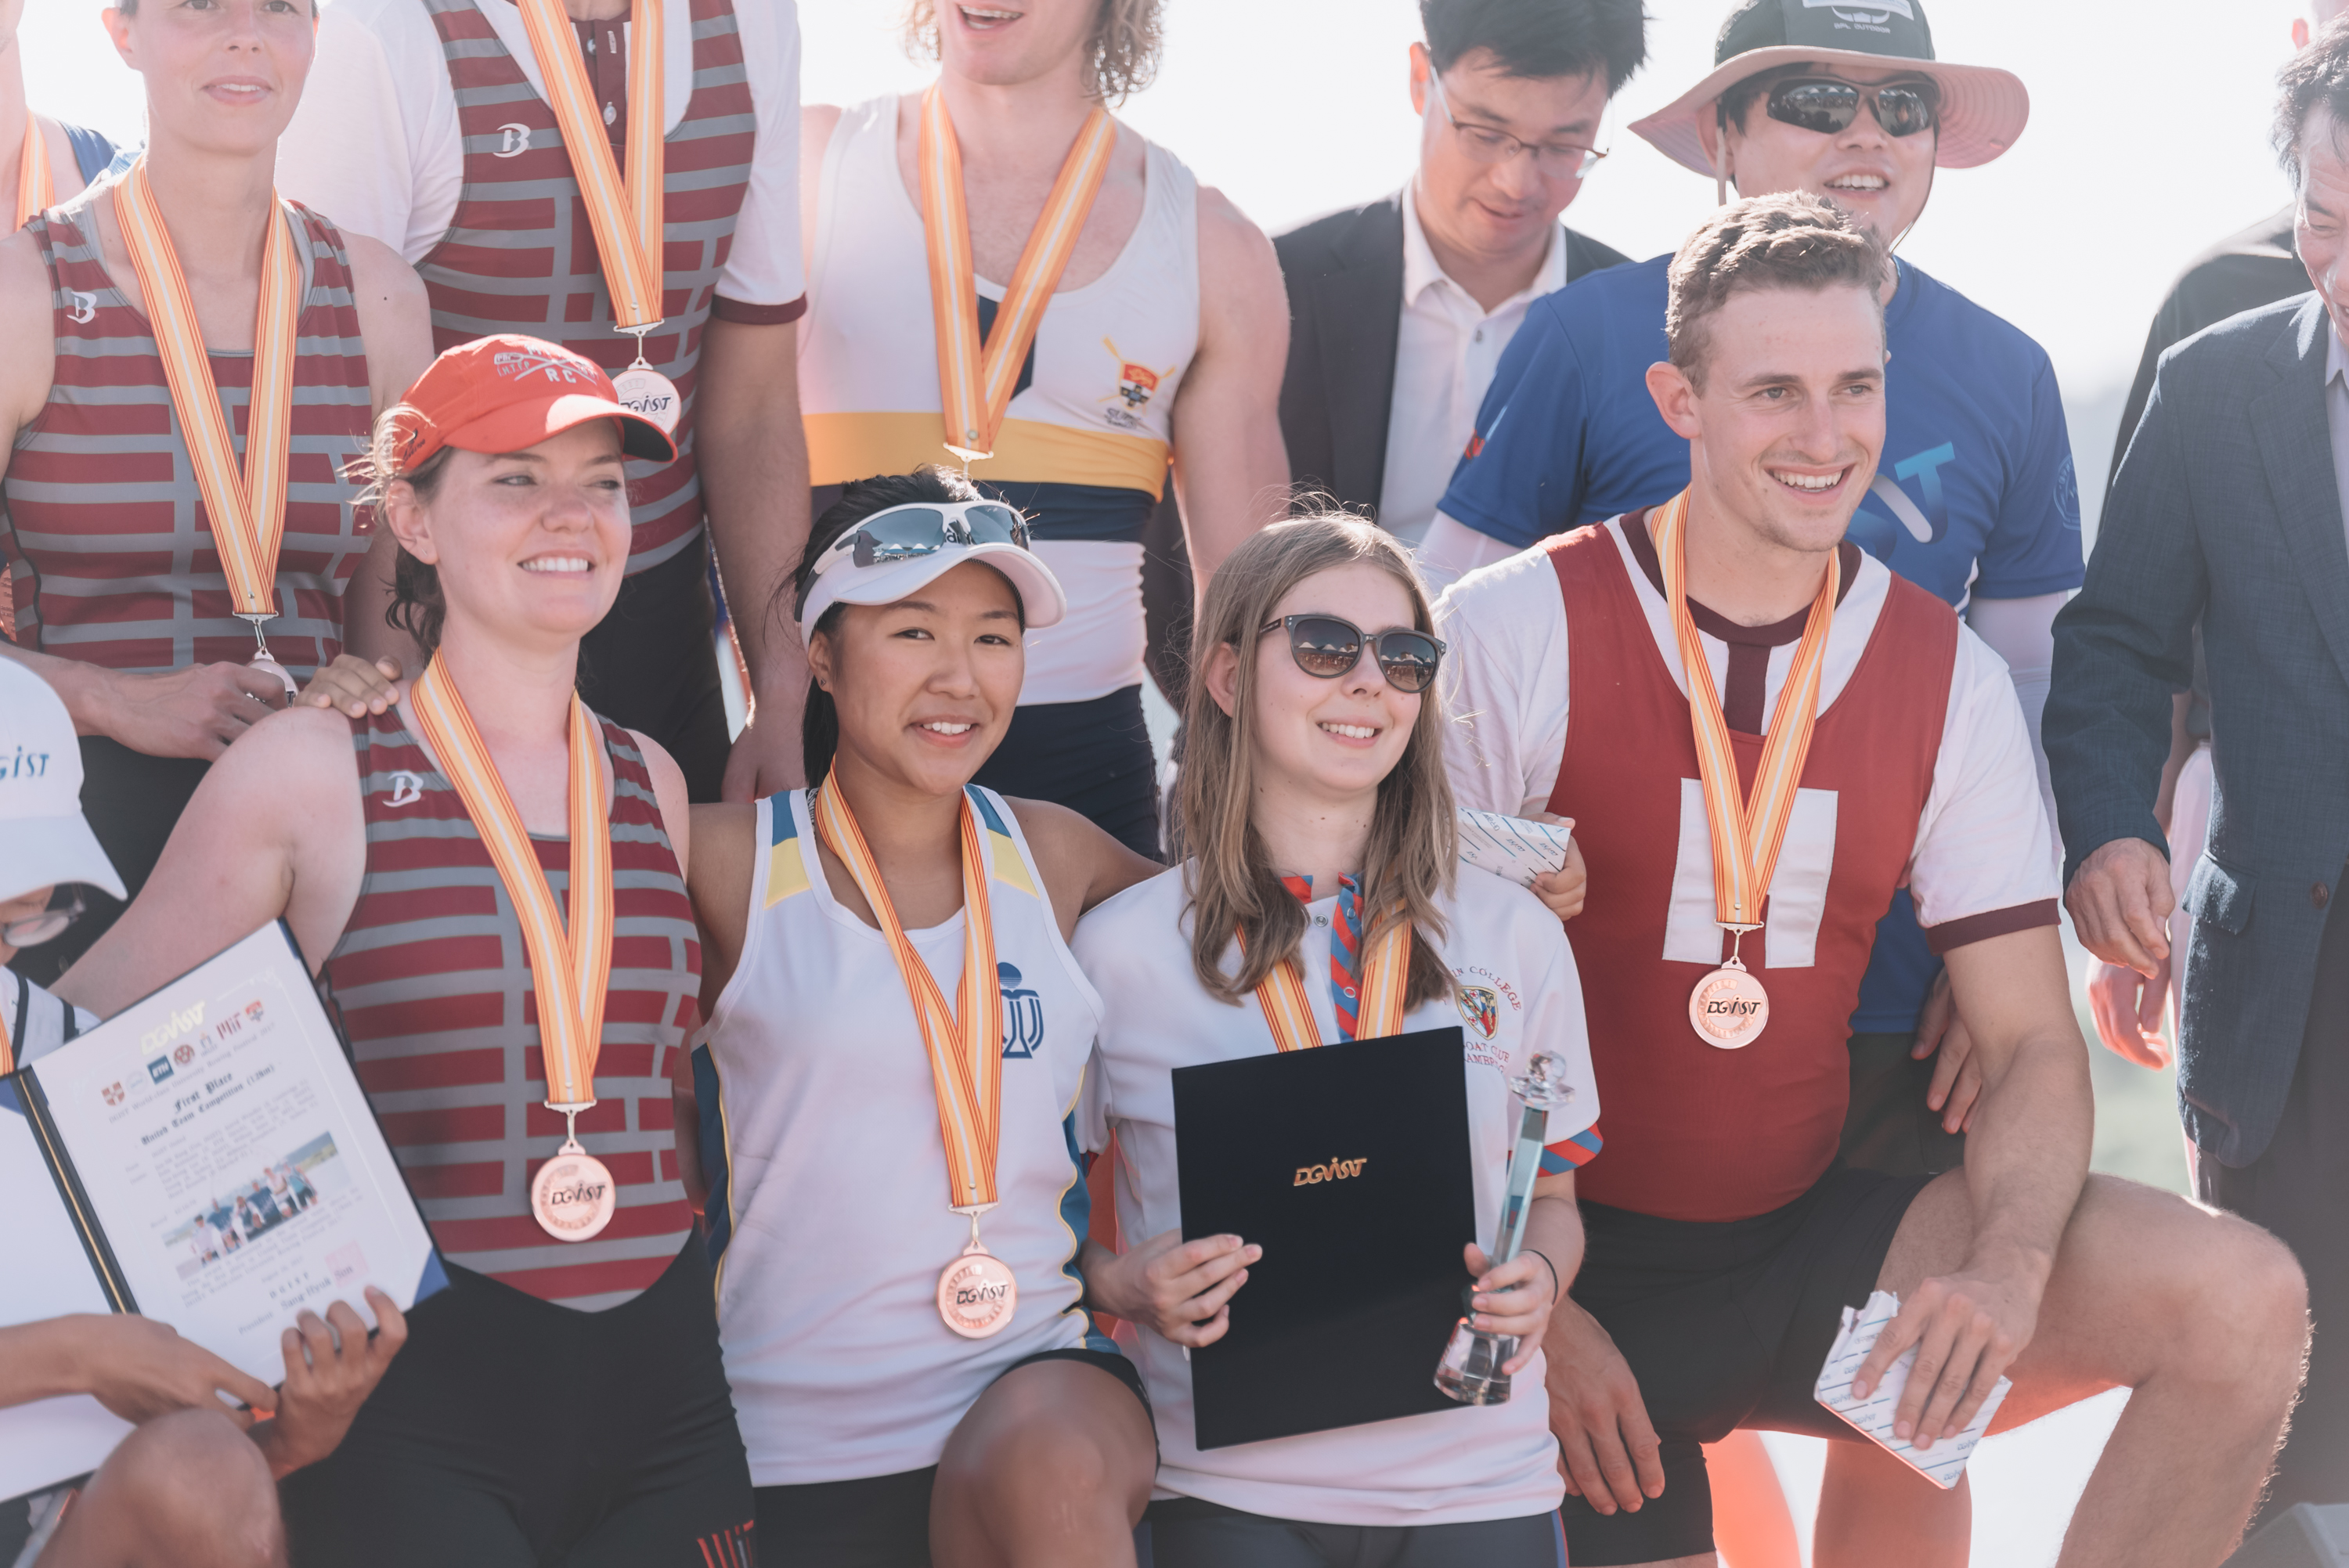 2017 DGIST World-class University Rowing Festival